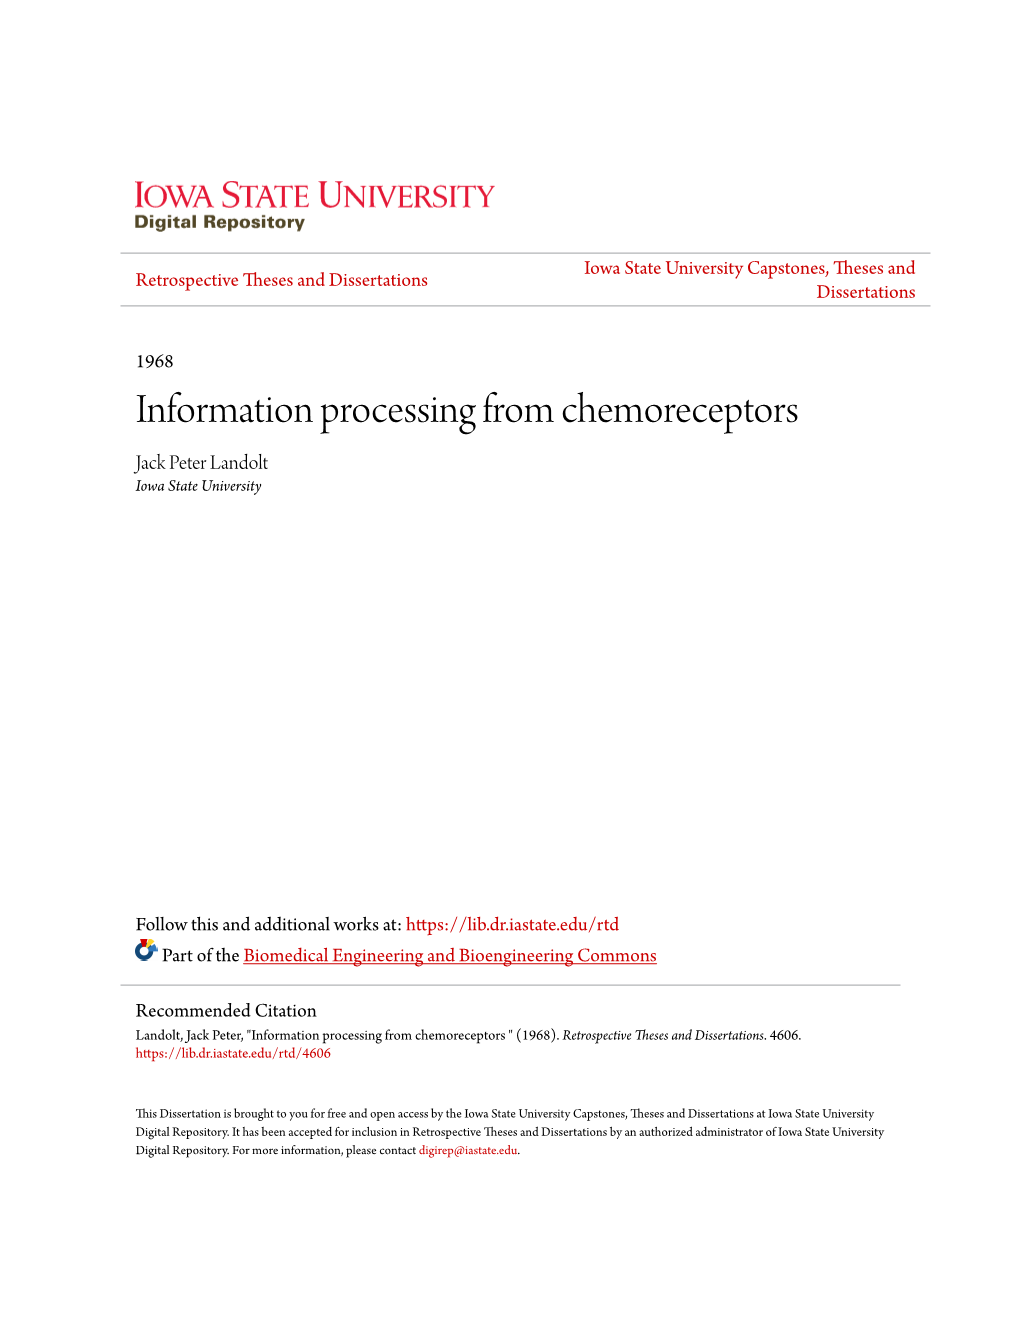 Information Processing from Chemoreceptors Jack Peter Landolt Iowa State University